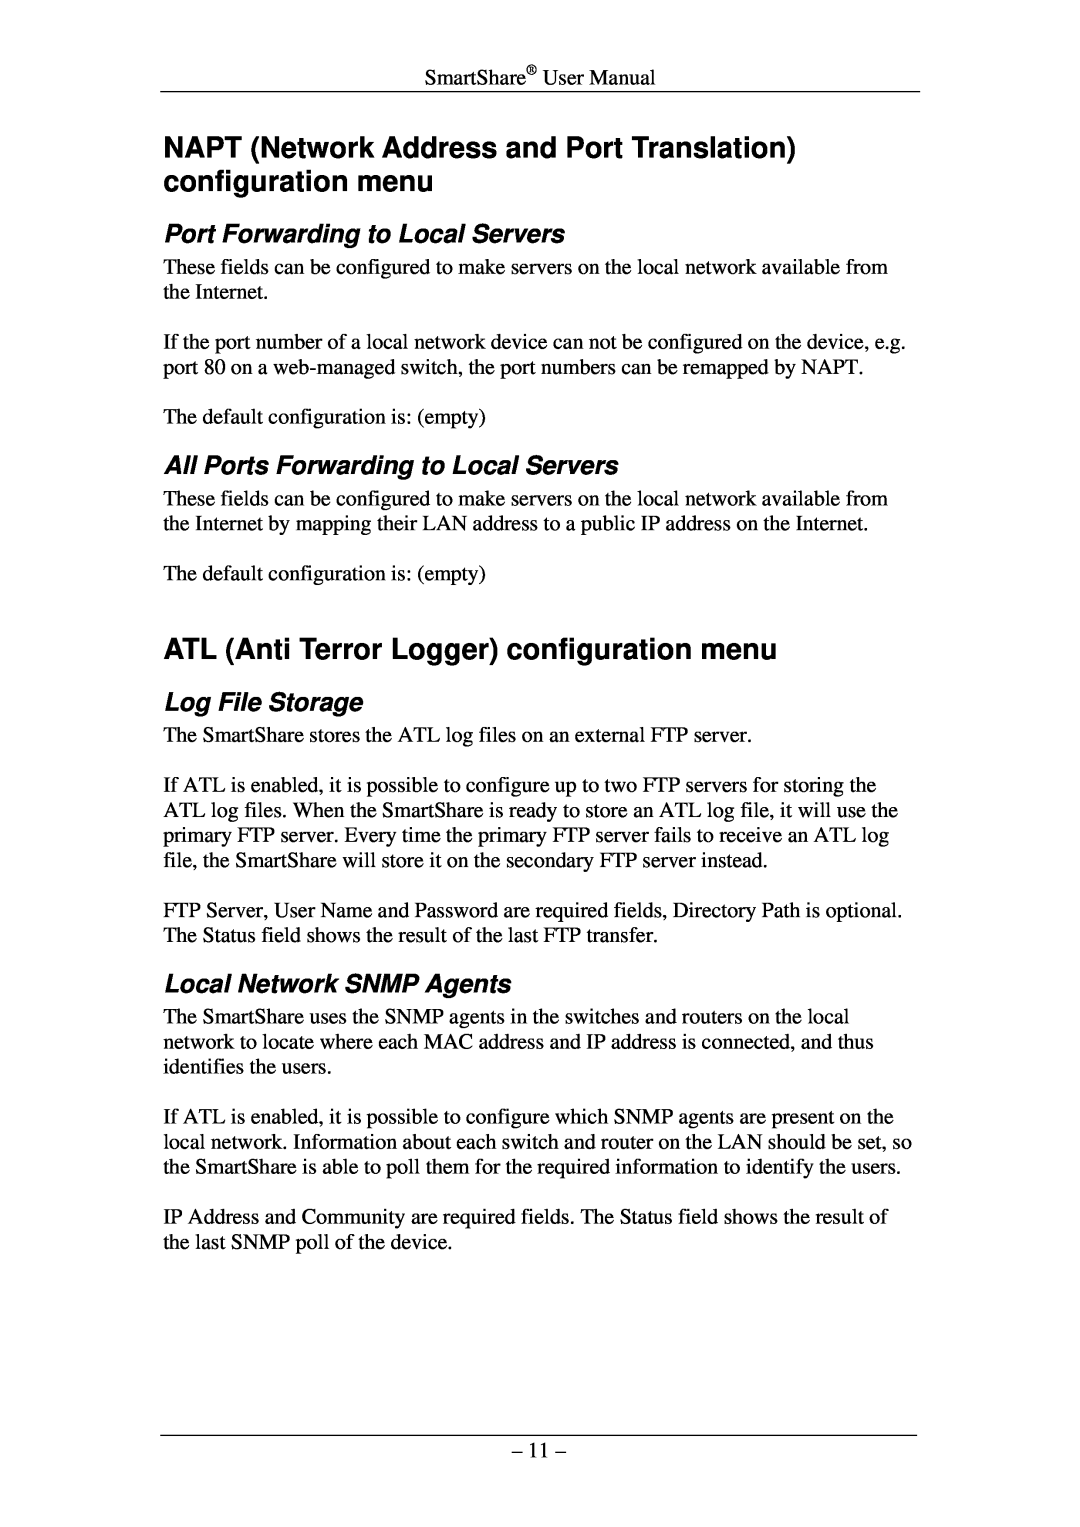 HP RM-50, DT-5 NAPT Network Address and Port Translation configuration menu, ATL Anti Terror Logger configuration menu 